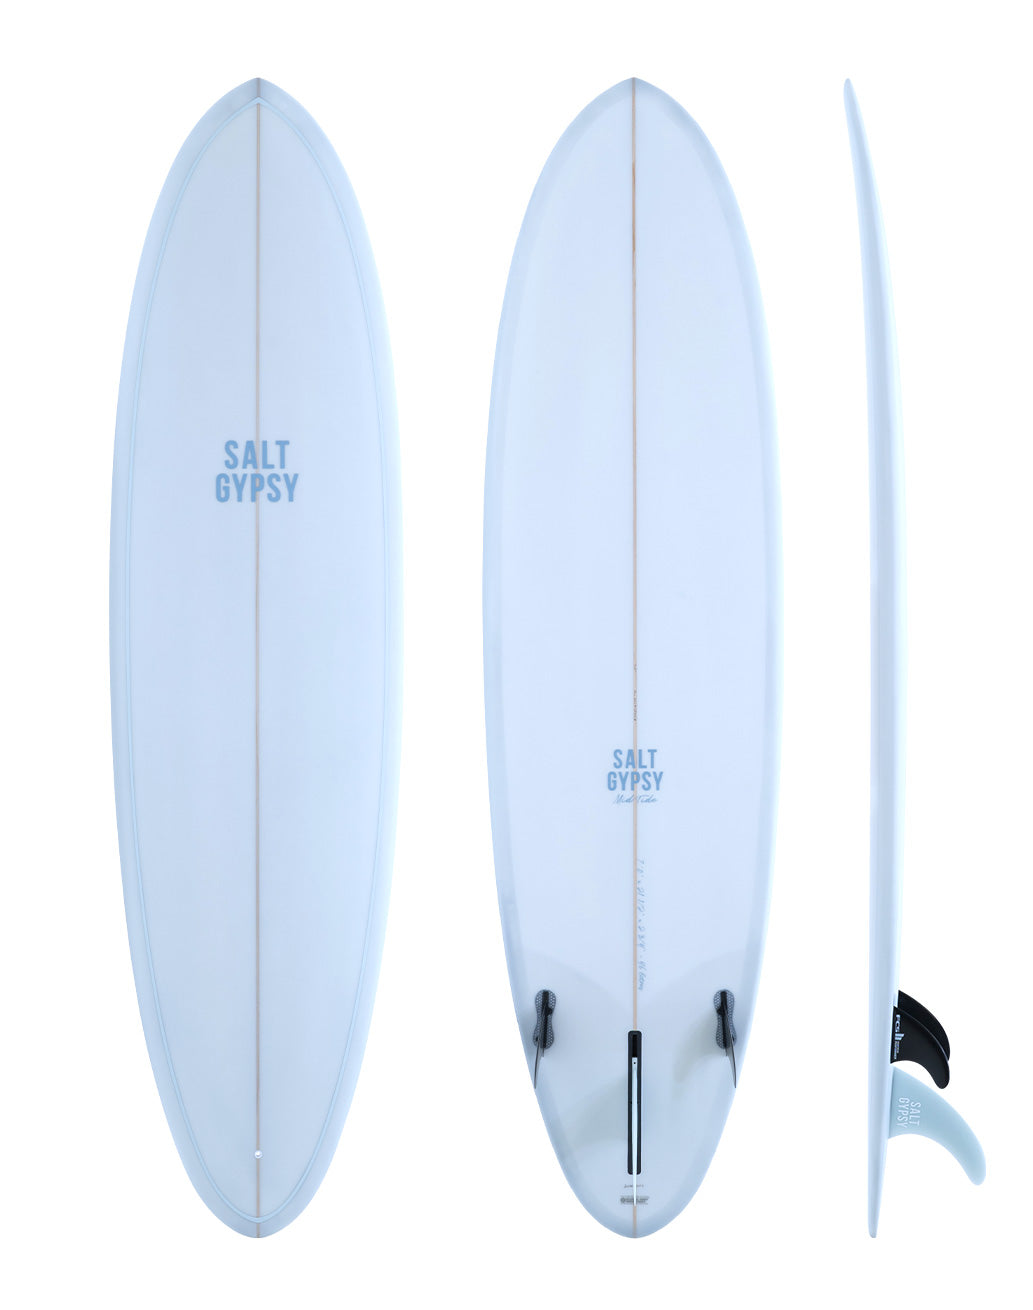 Salt Gypsy Surfboards - Mid Tide vintage blue mid length surfboard